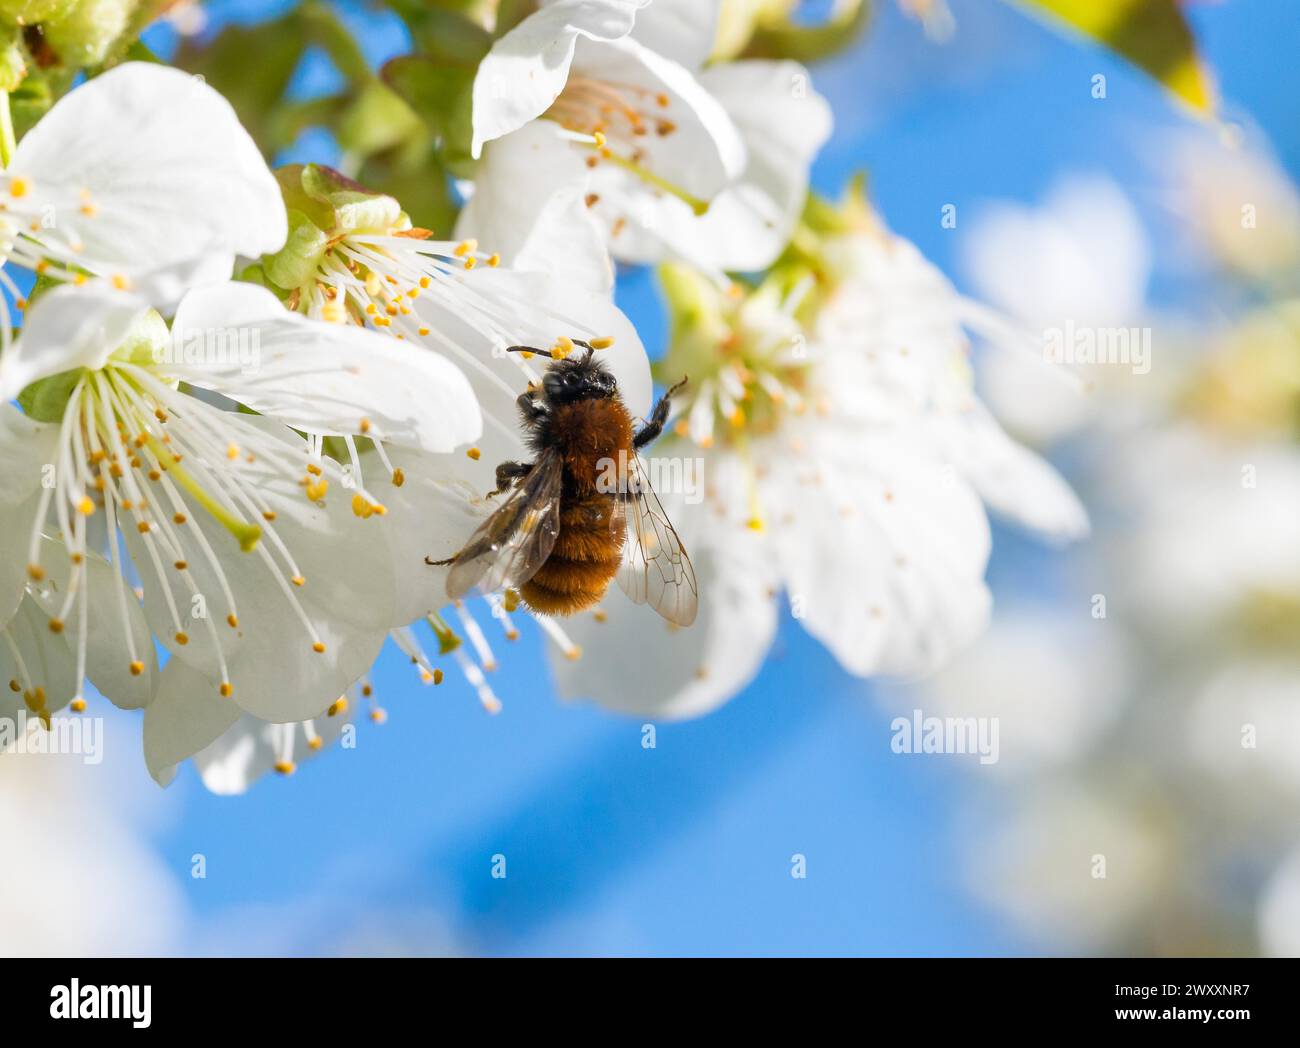 Tawny mining bee (Andrena fulva), female collects pollen from fragrant, white flowers of bird cherry (Prunus avium) or sweet cherry, cherry blossom Stock Photo